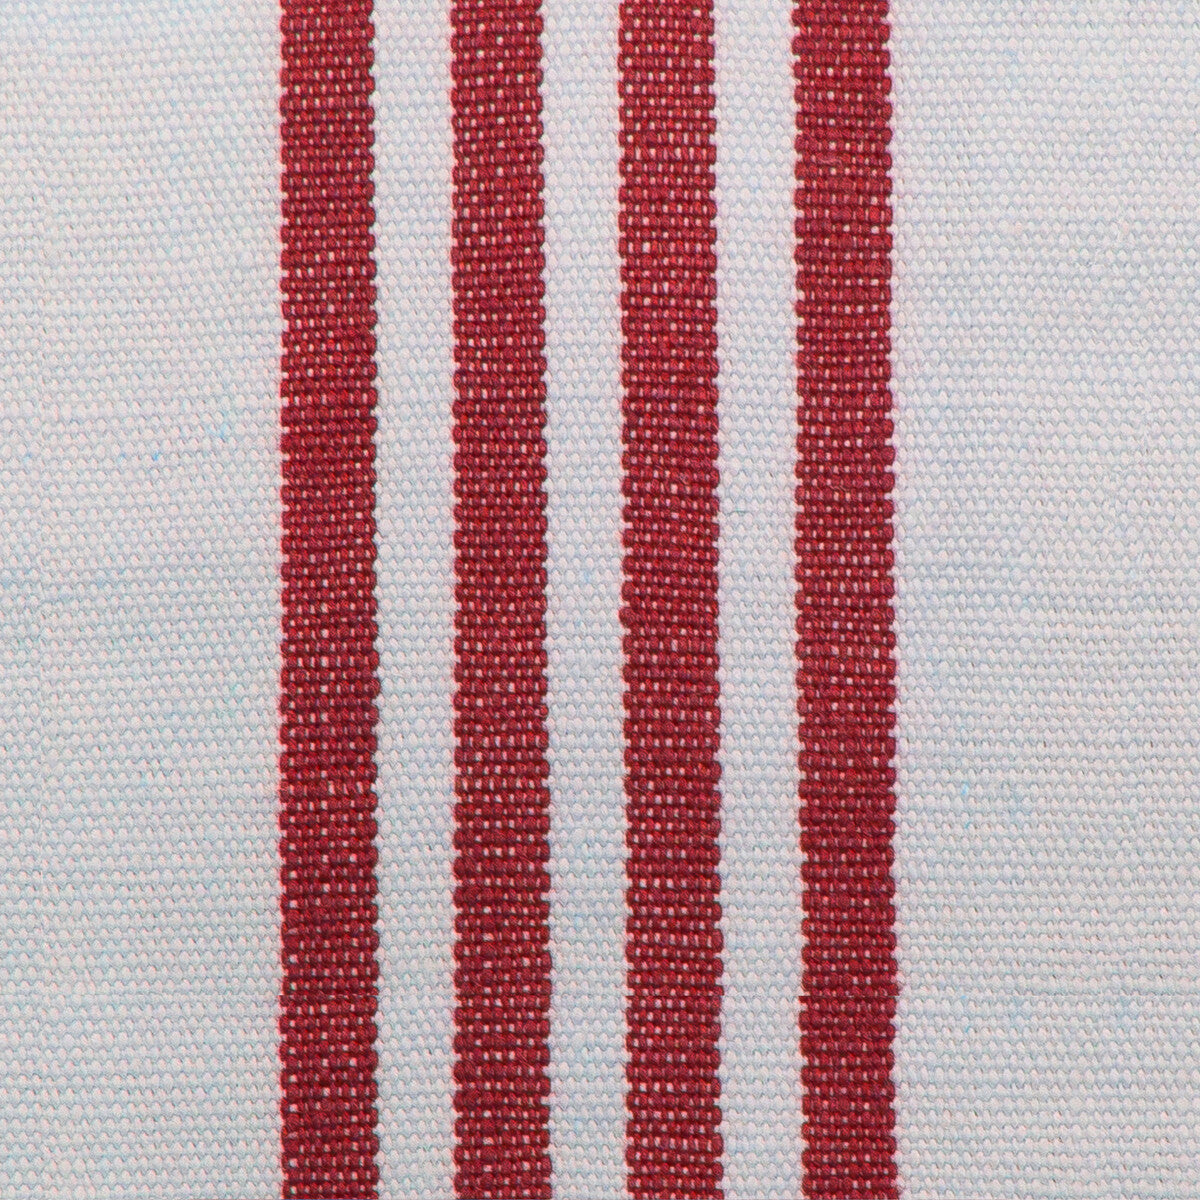 Miami fabric in rojo color - pattern GDT5560.003.0 - by Gaston y Daniela in the Gaston Luis Bustamante collection